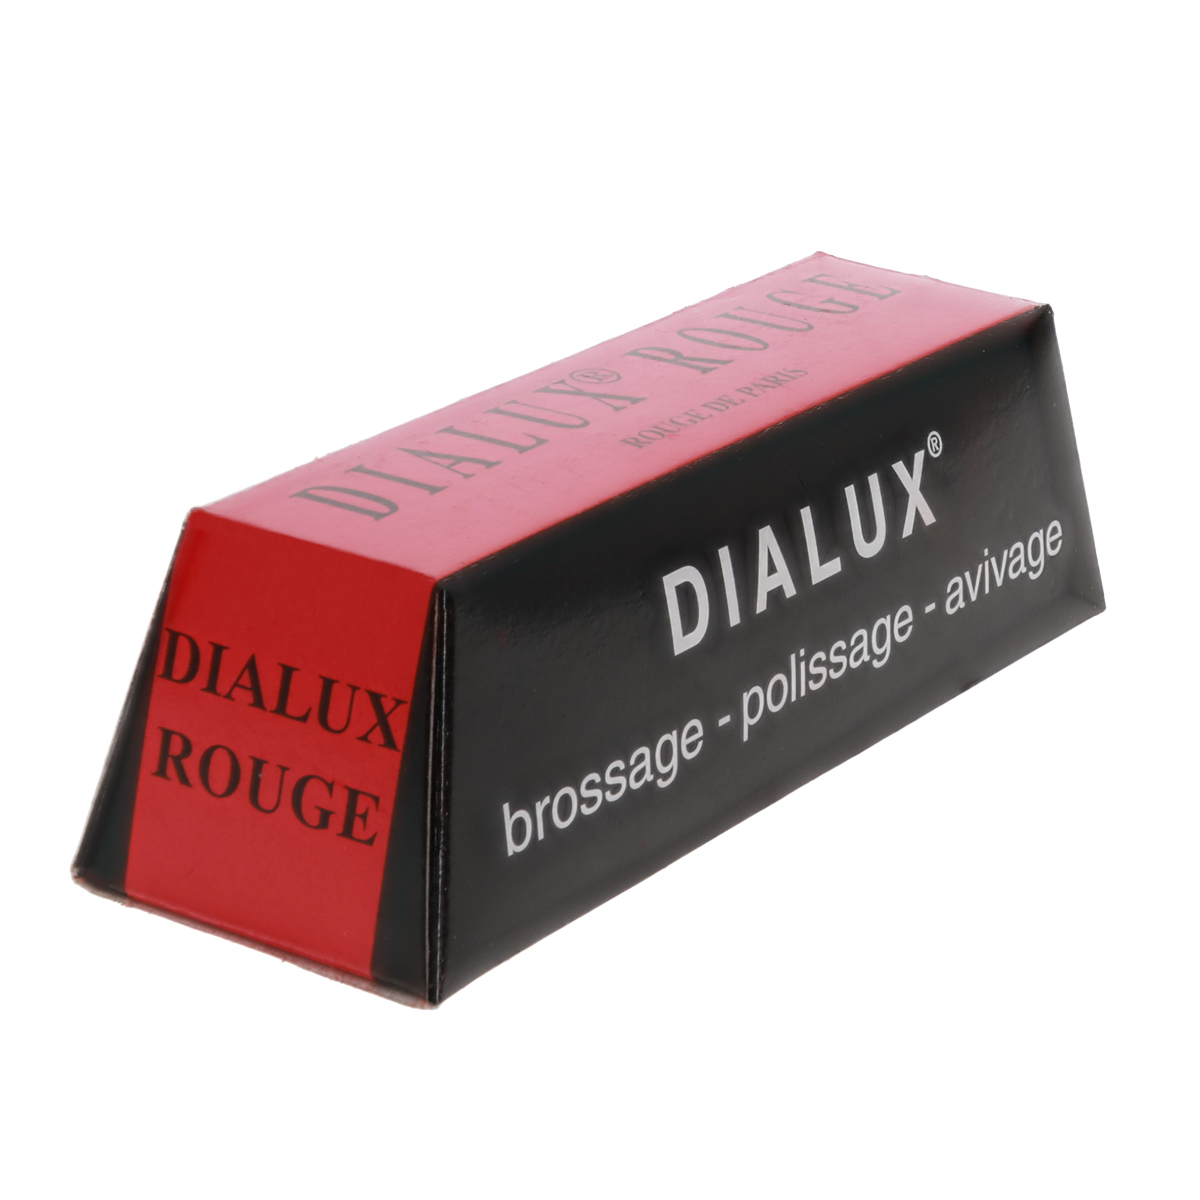 Dialux polishing paste red